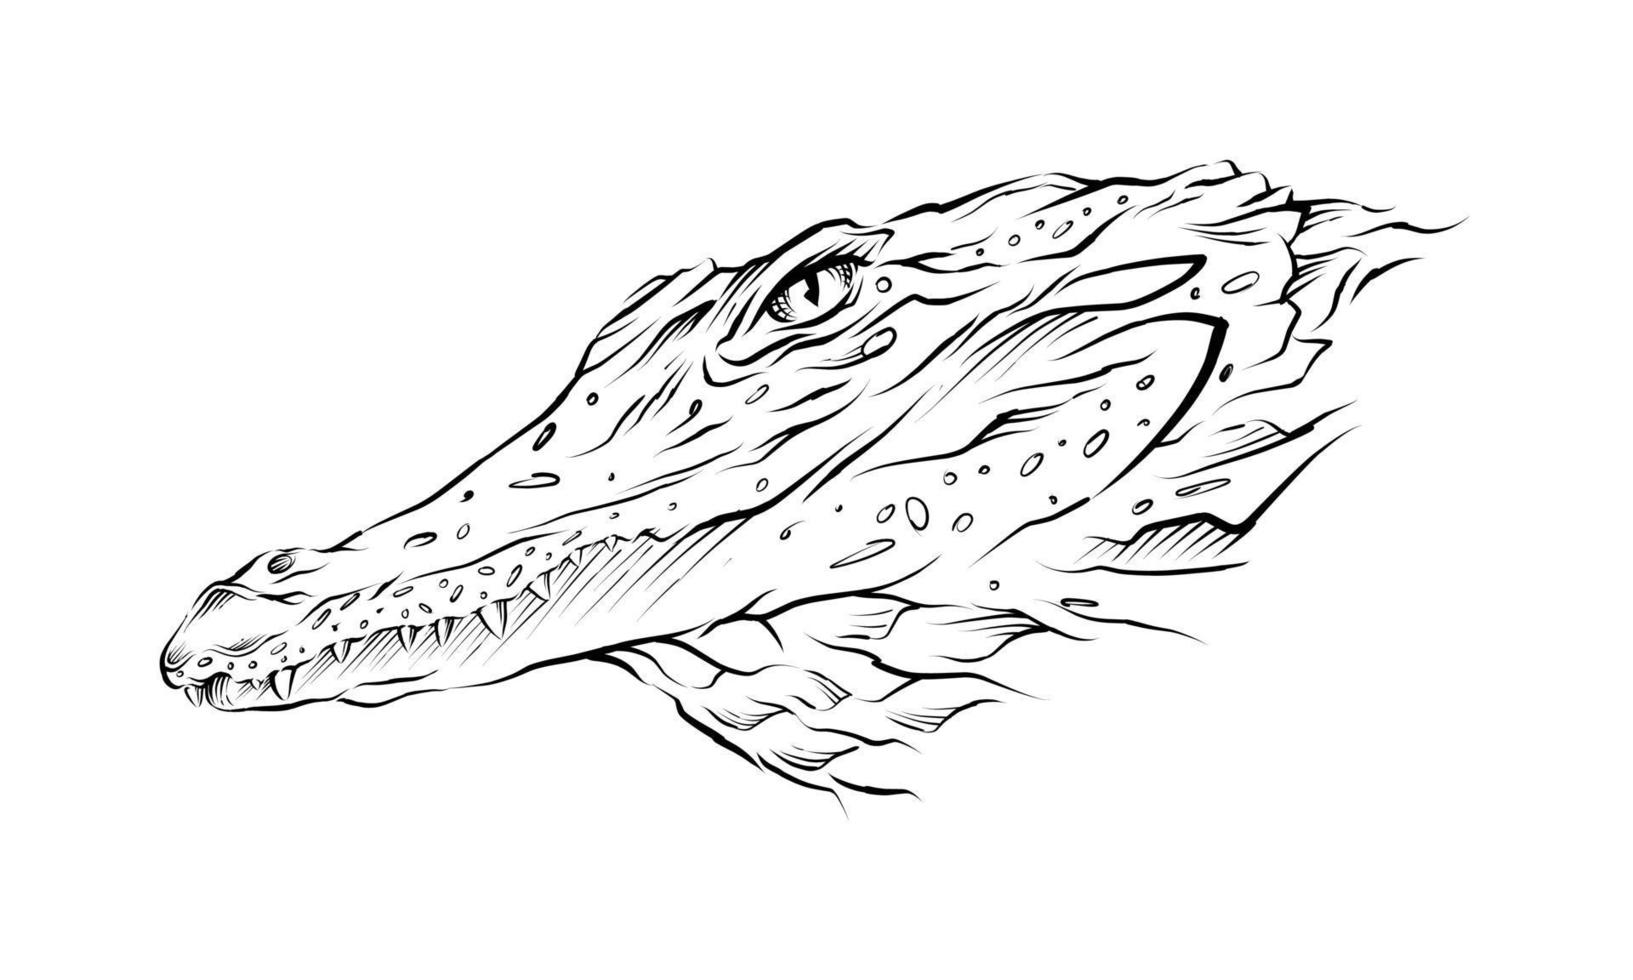 Krokodilkopf handgezeichnete Illustration vektor